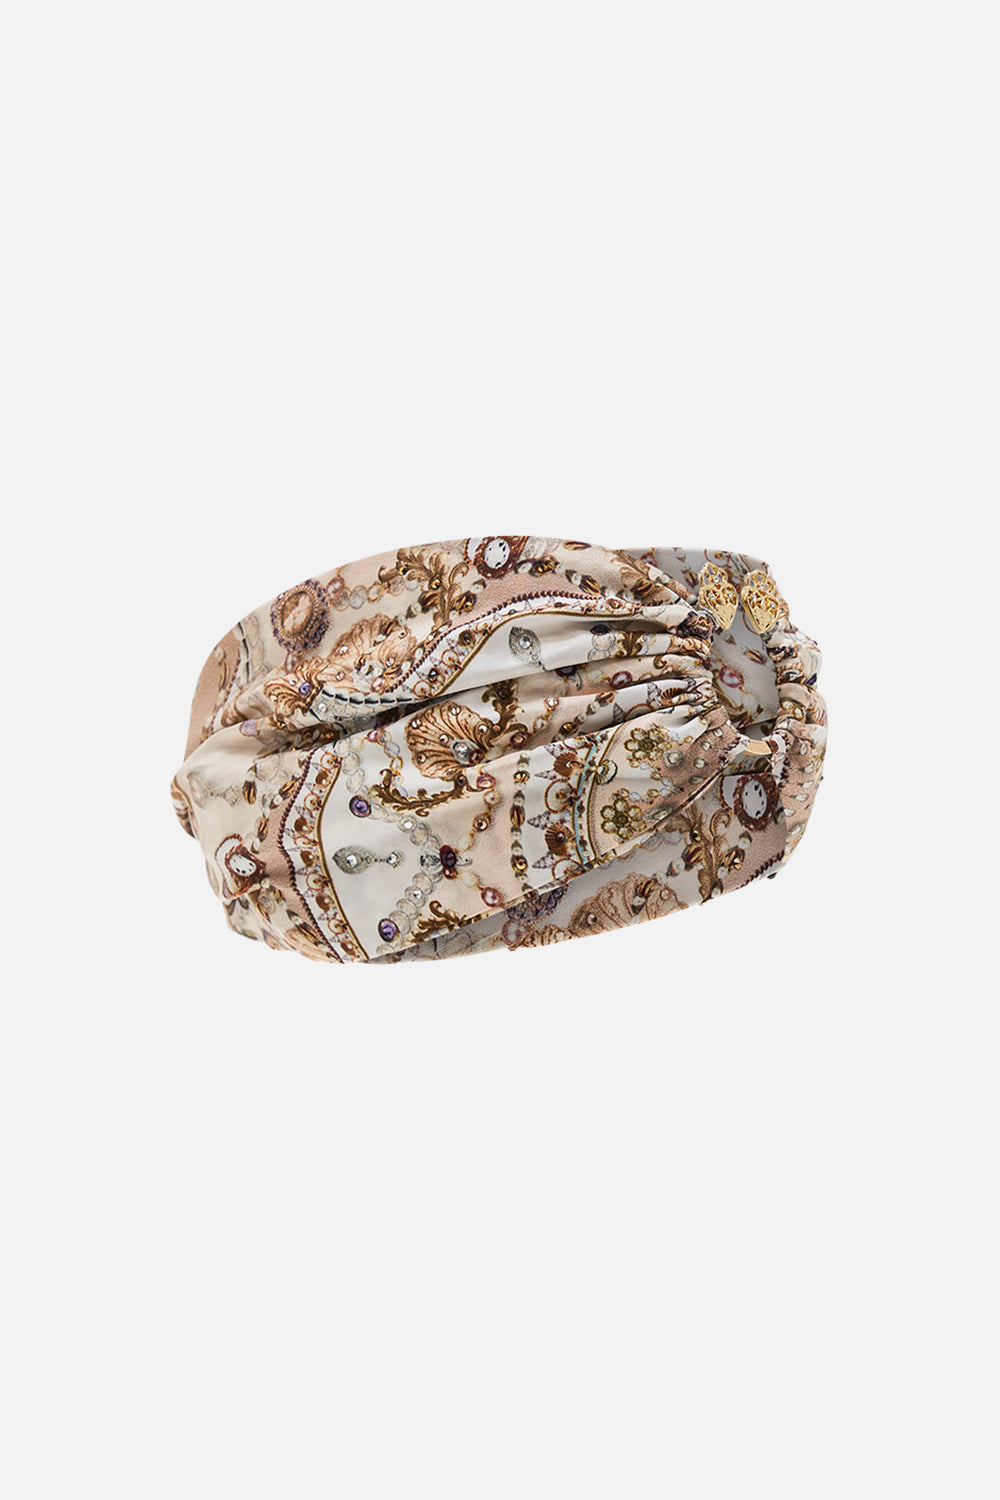 CAMILLA blush ring headband in Grotto Goddess